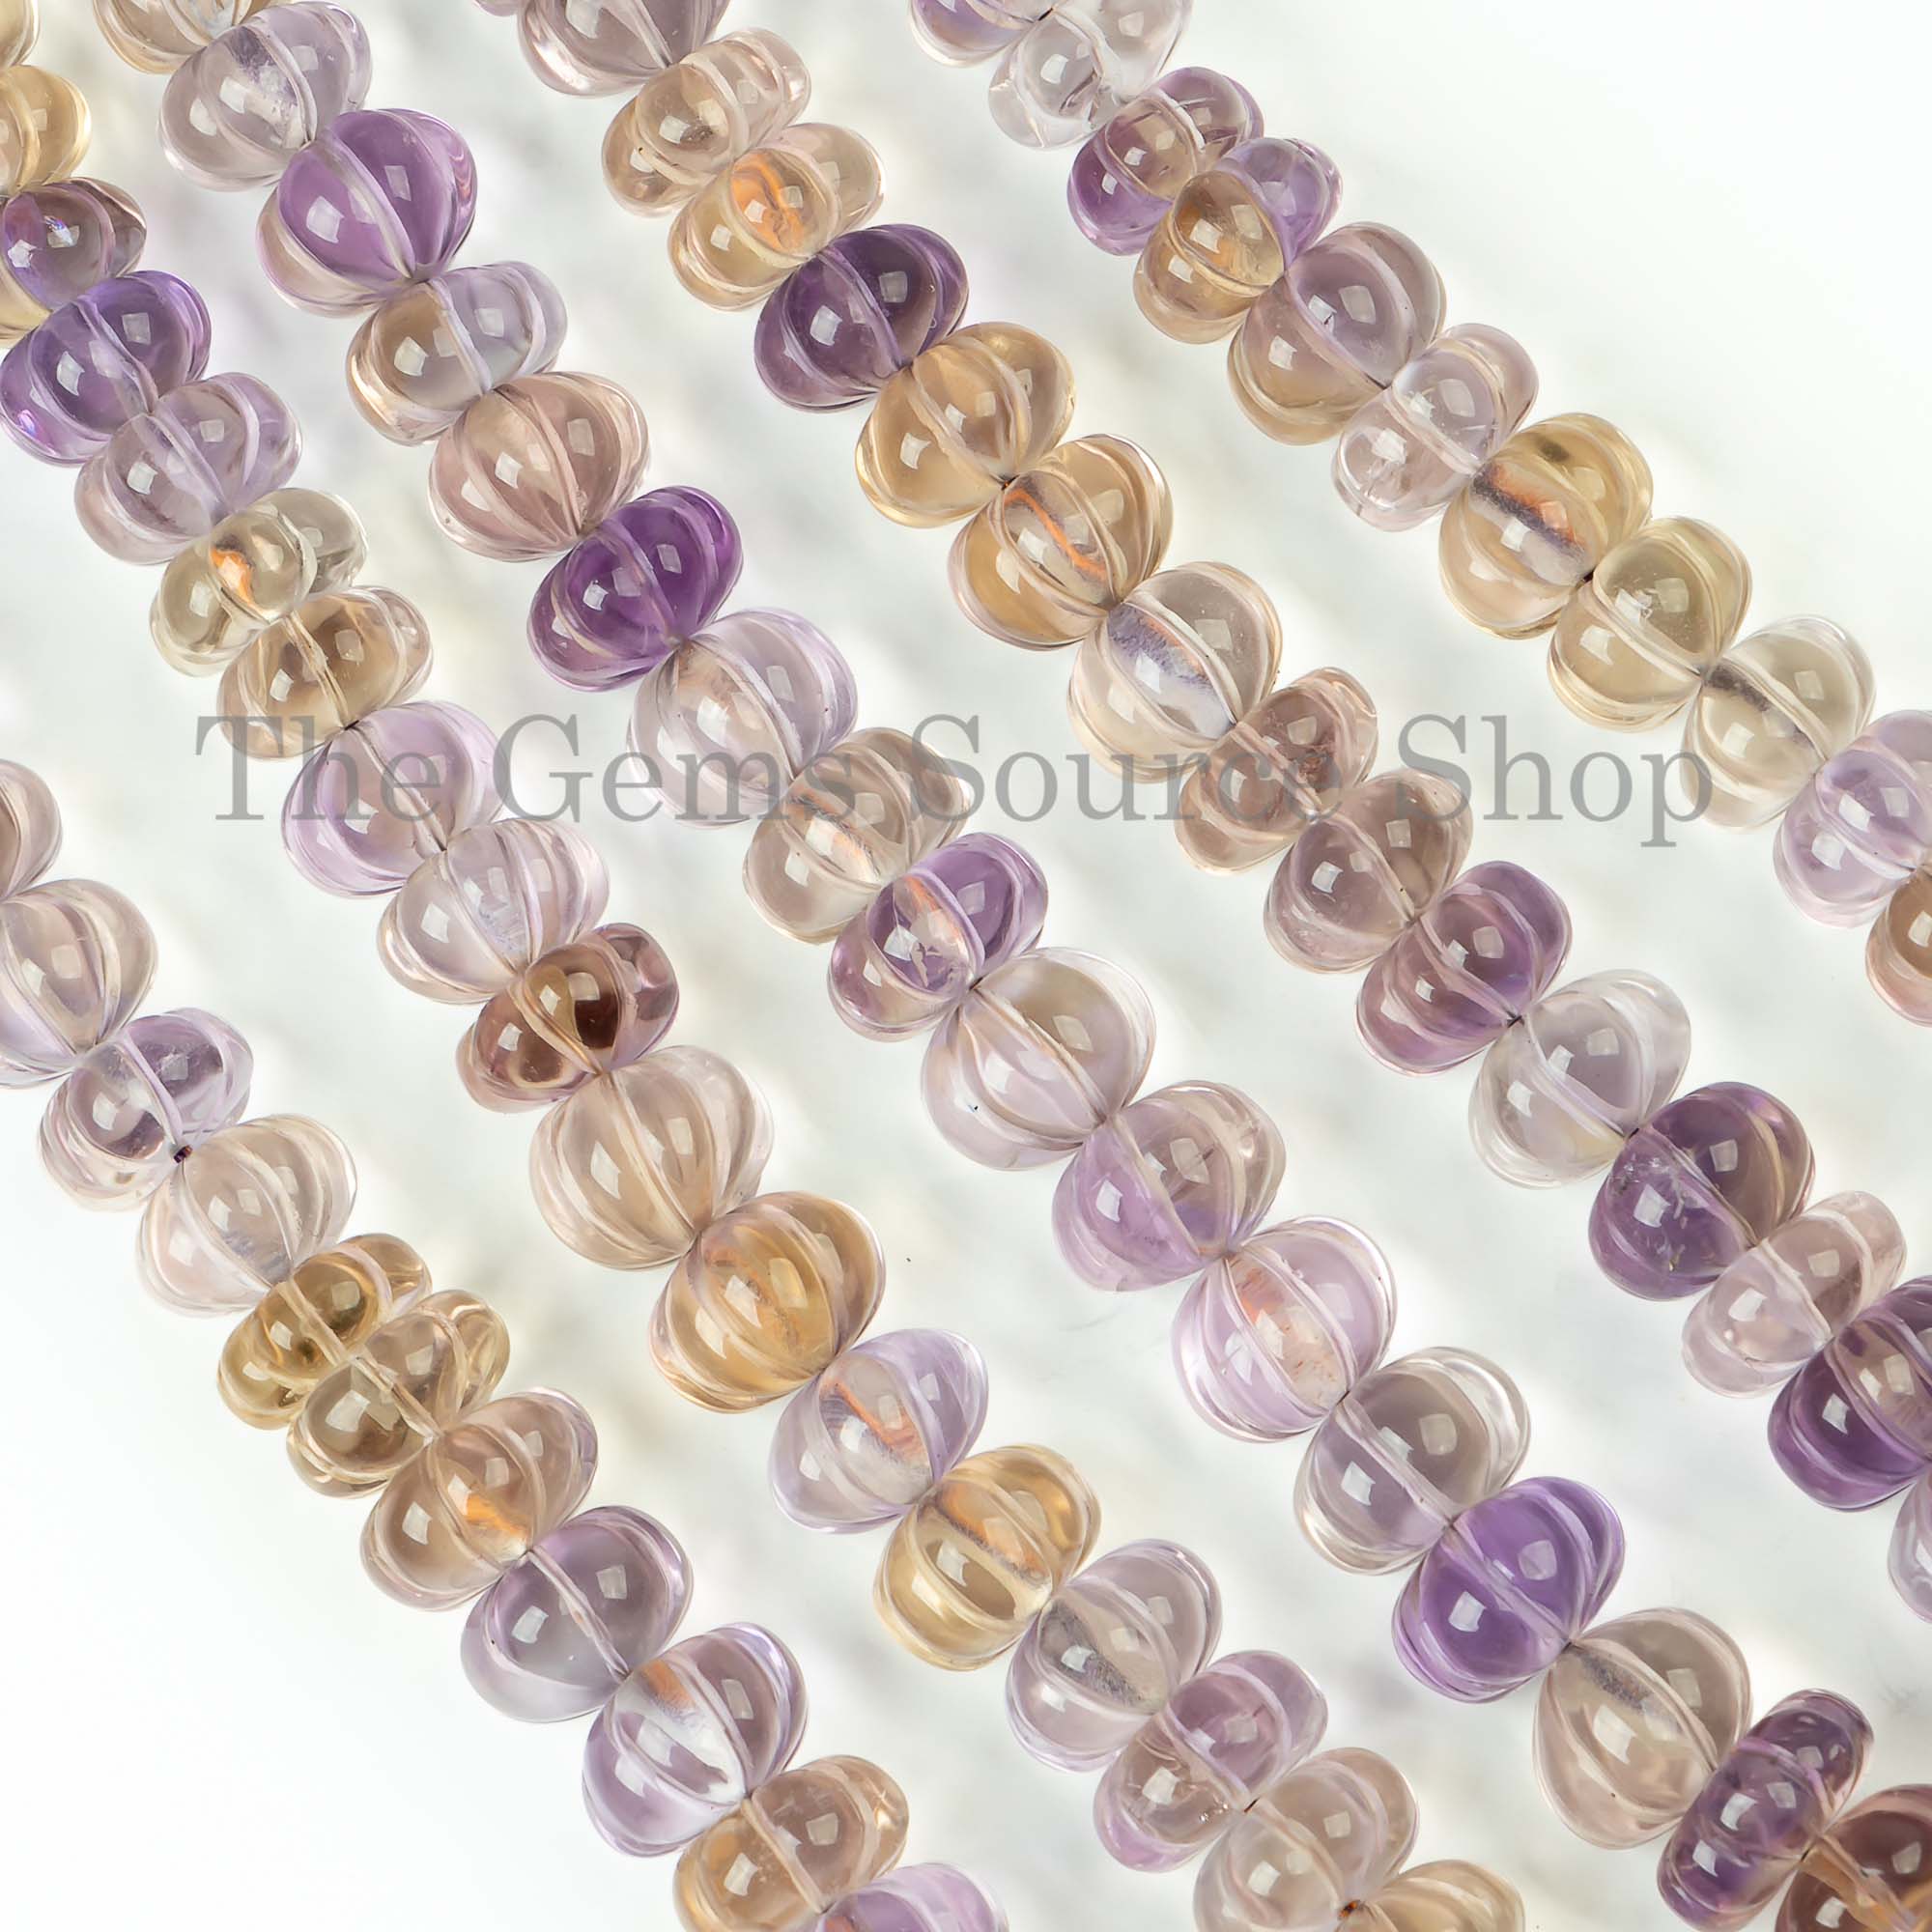 Ametrine Beads, Ametrine Smooth Plain Carving Beads, Ametrine Rondelle Beads, Pumpkin Beads